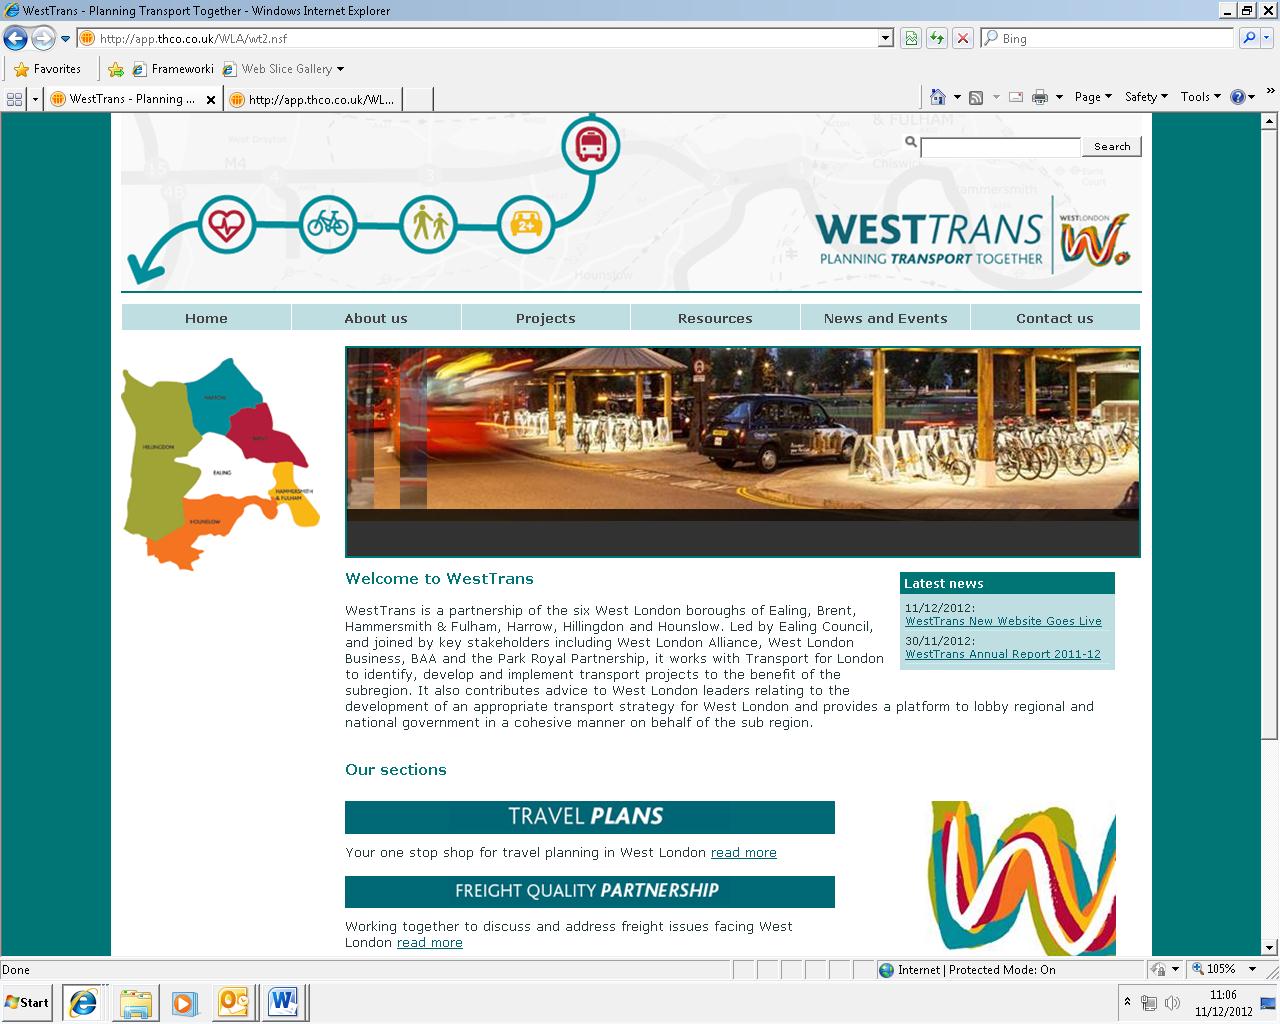 WestTrans Website image